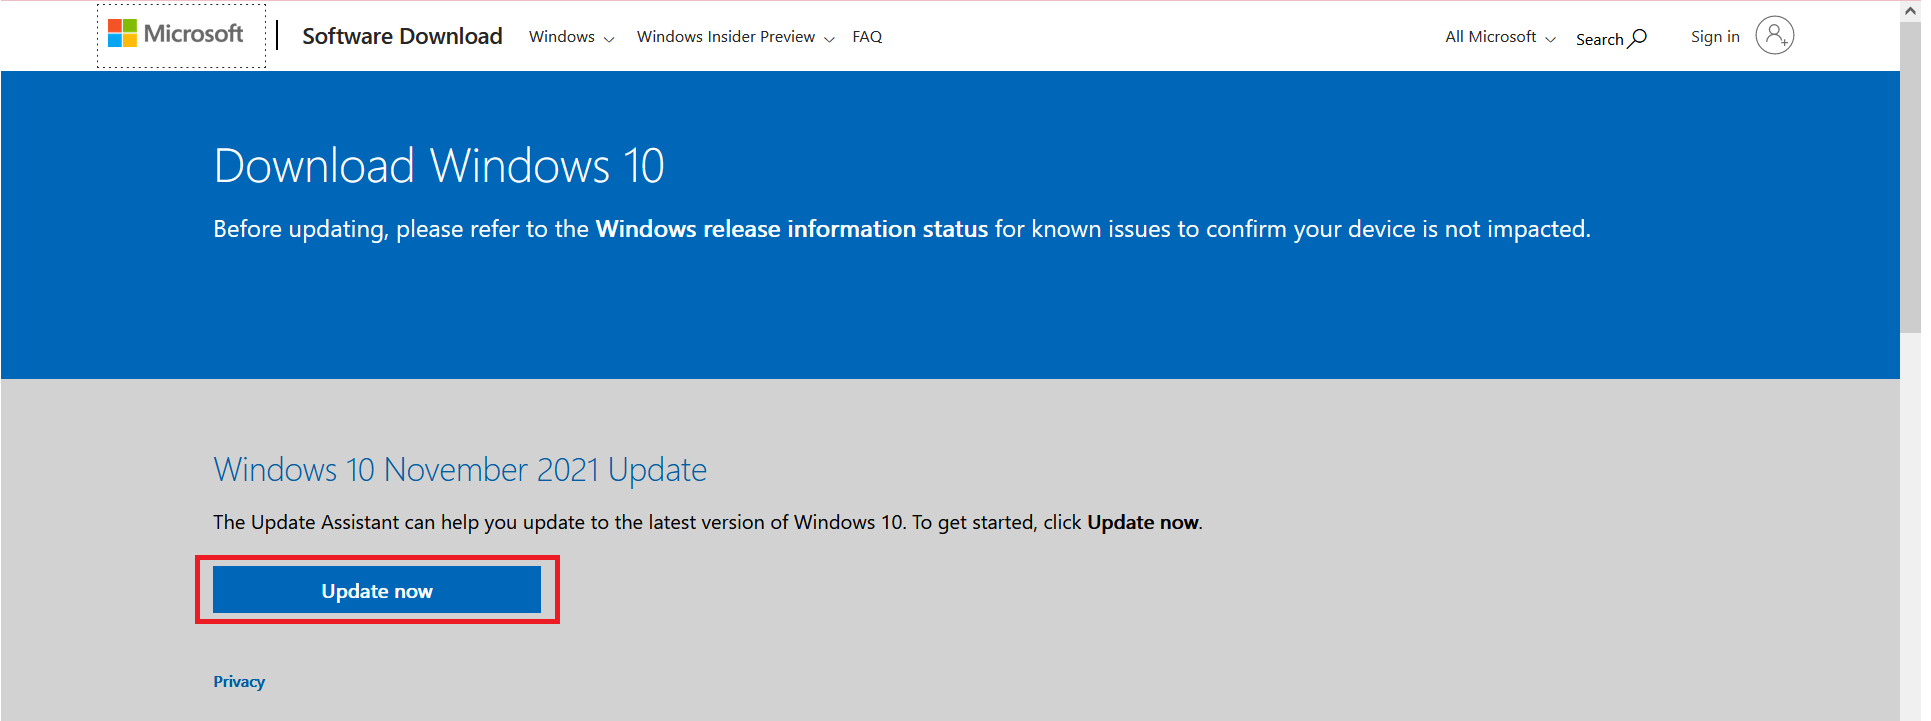 Windows 10 November 2021 Update